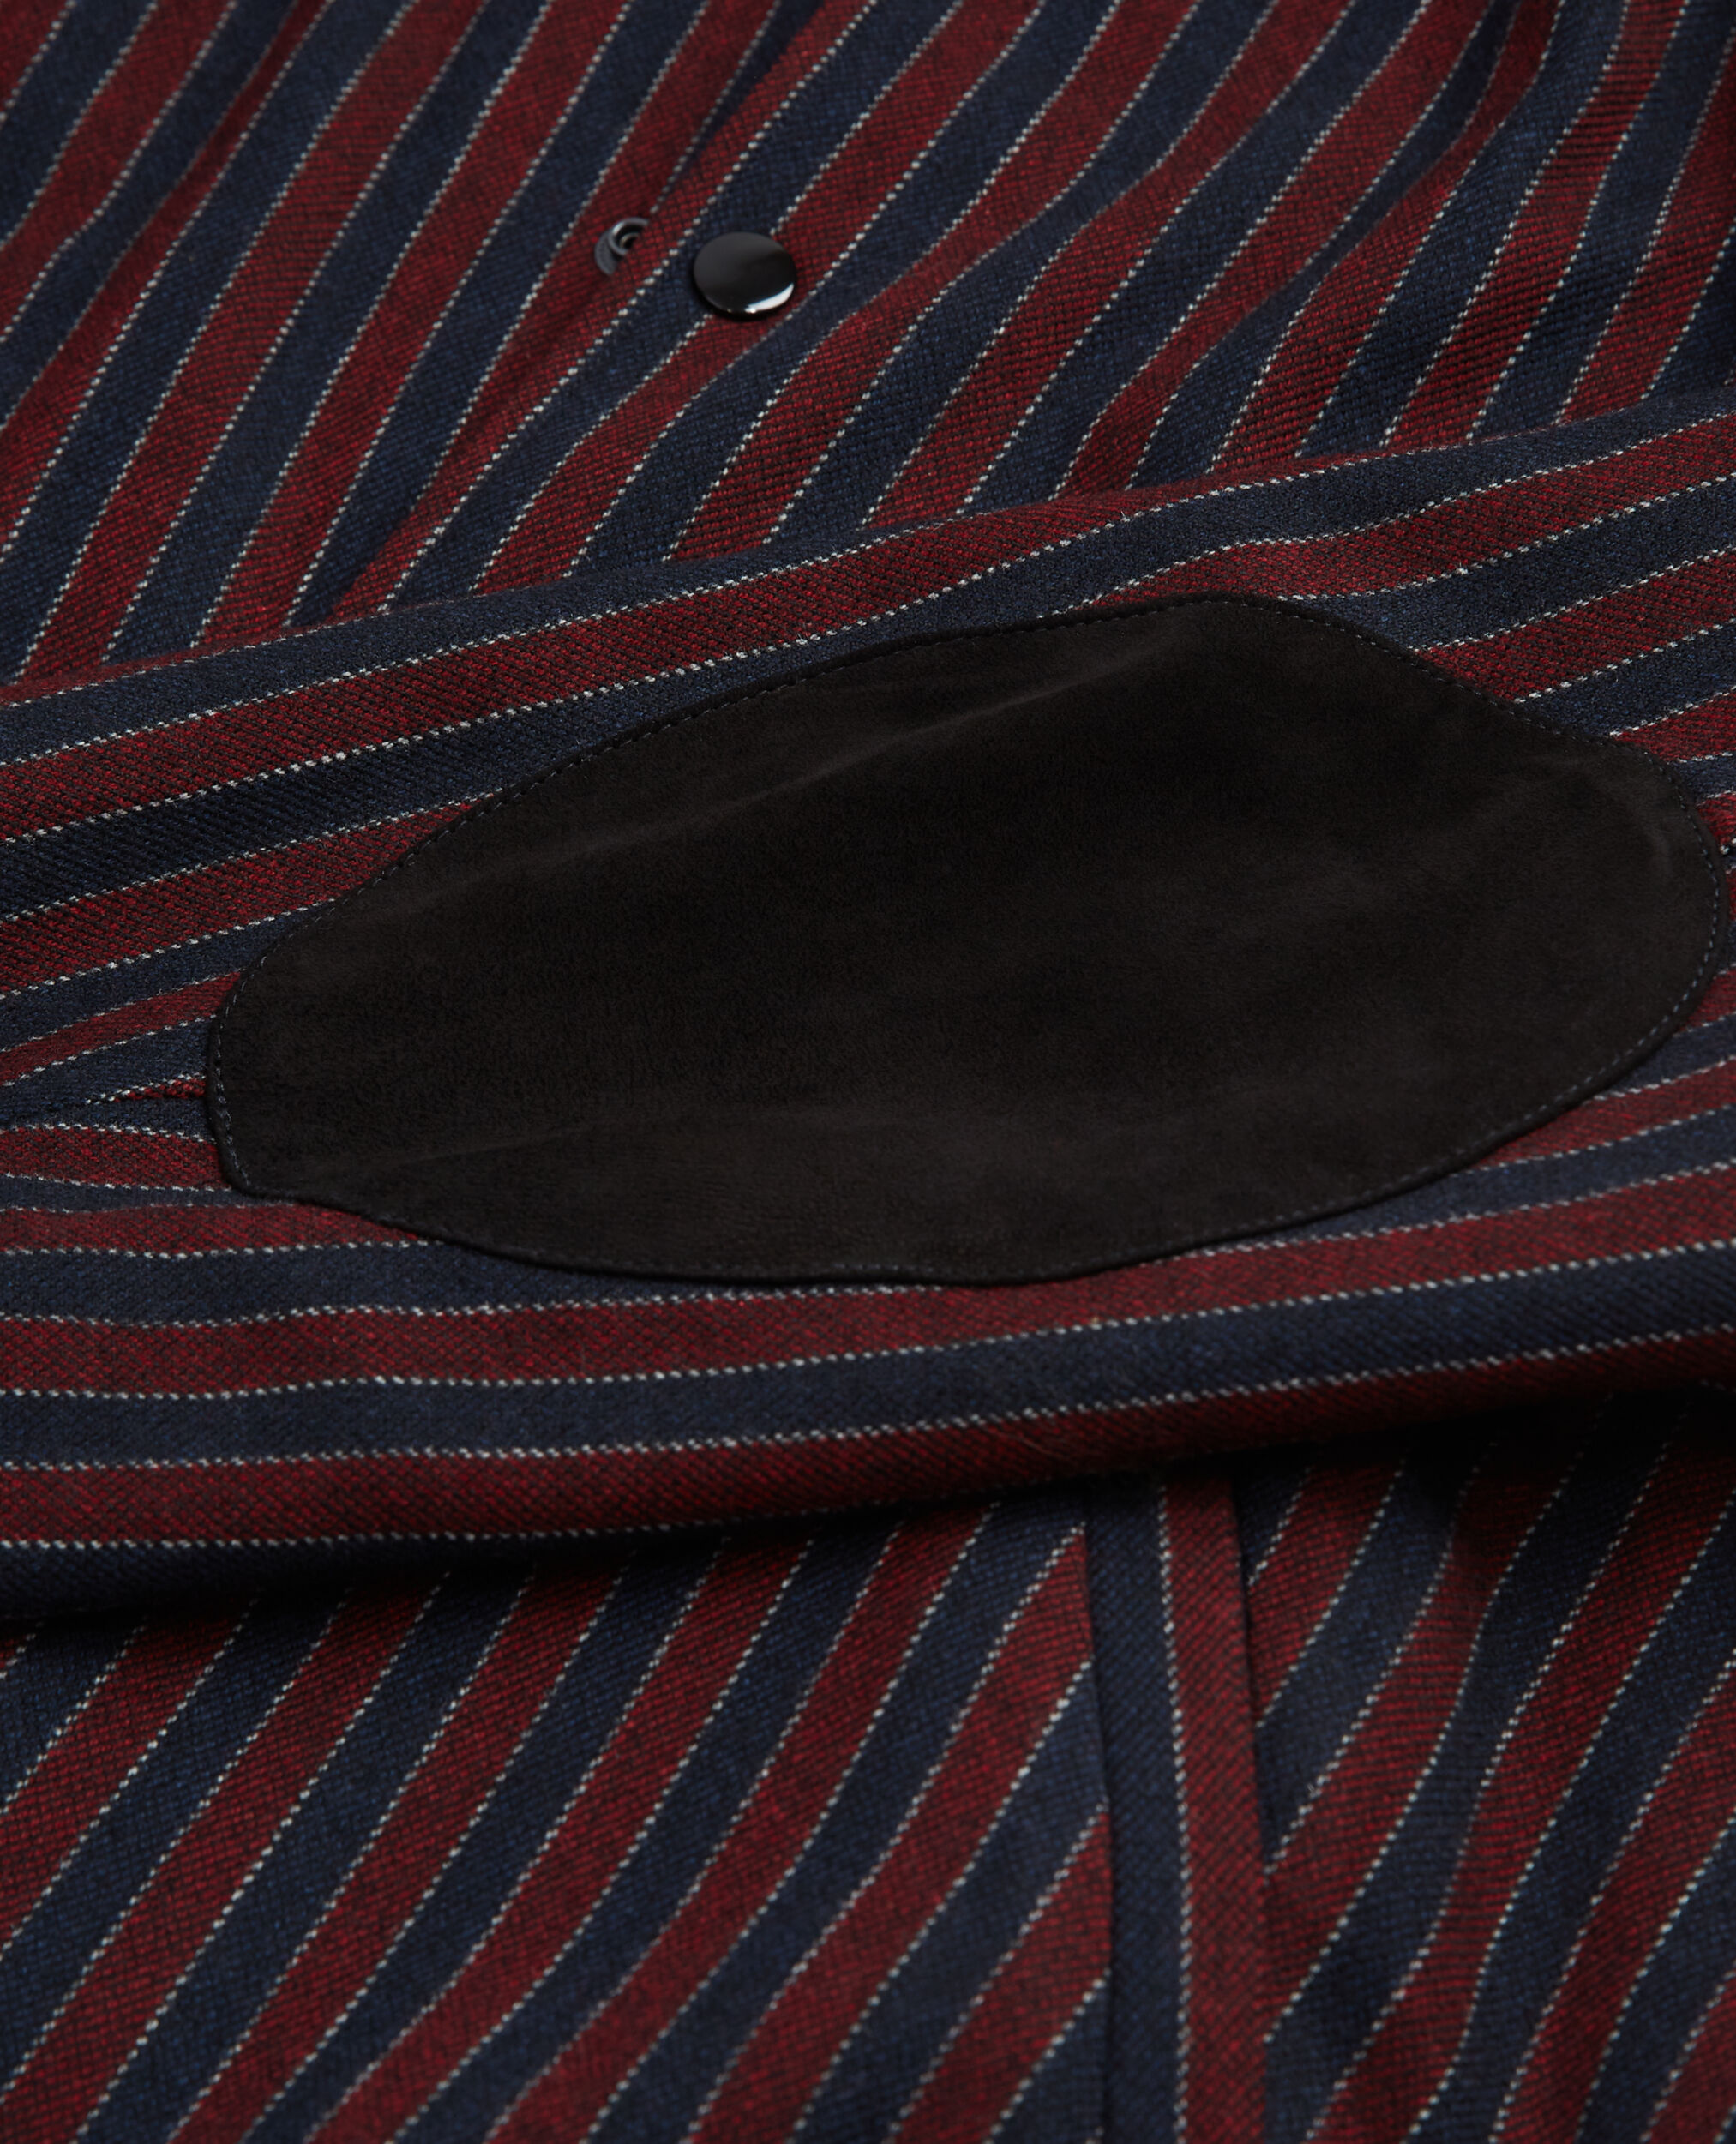 Striped jacket, BORDEAUX / NAVY, hi-res image number null